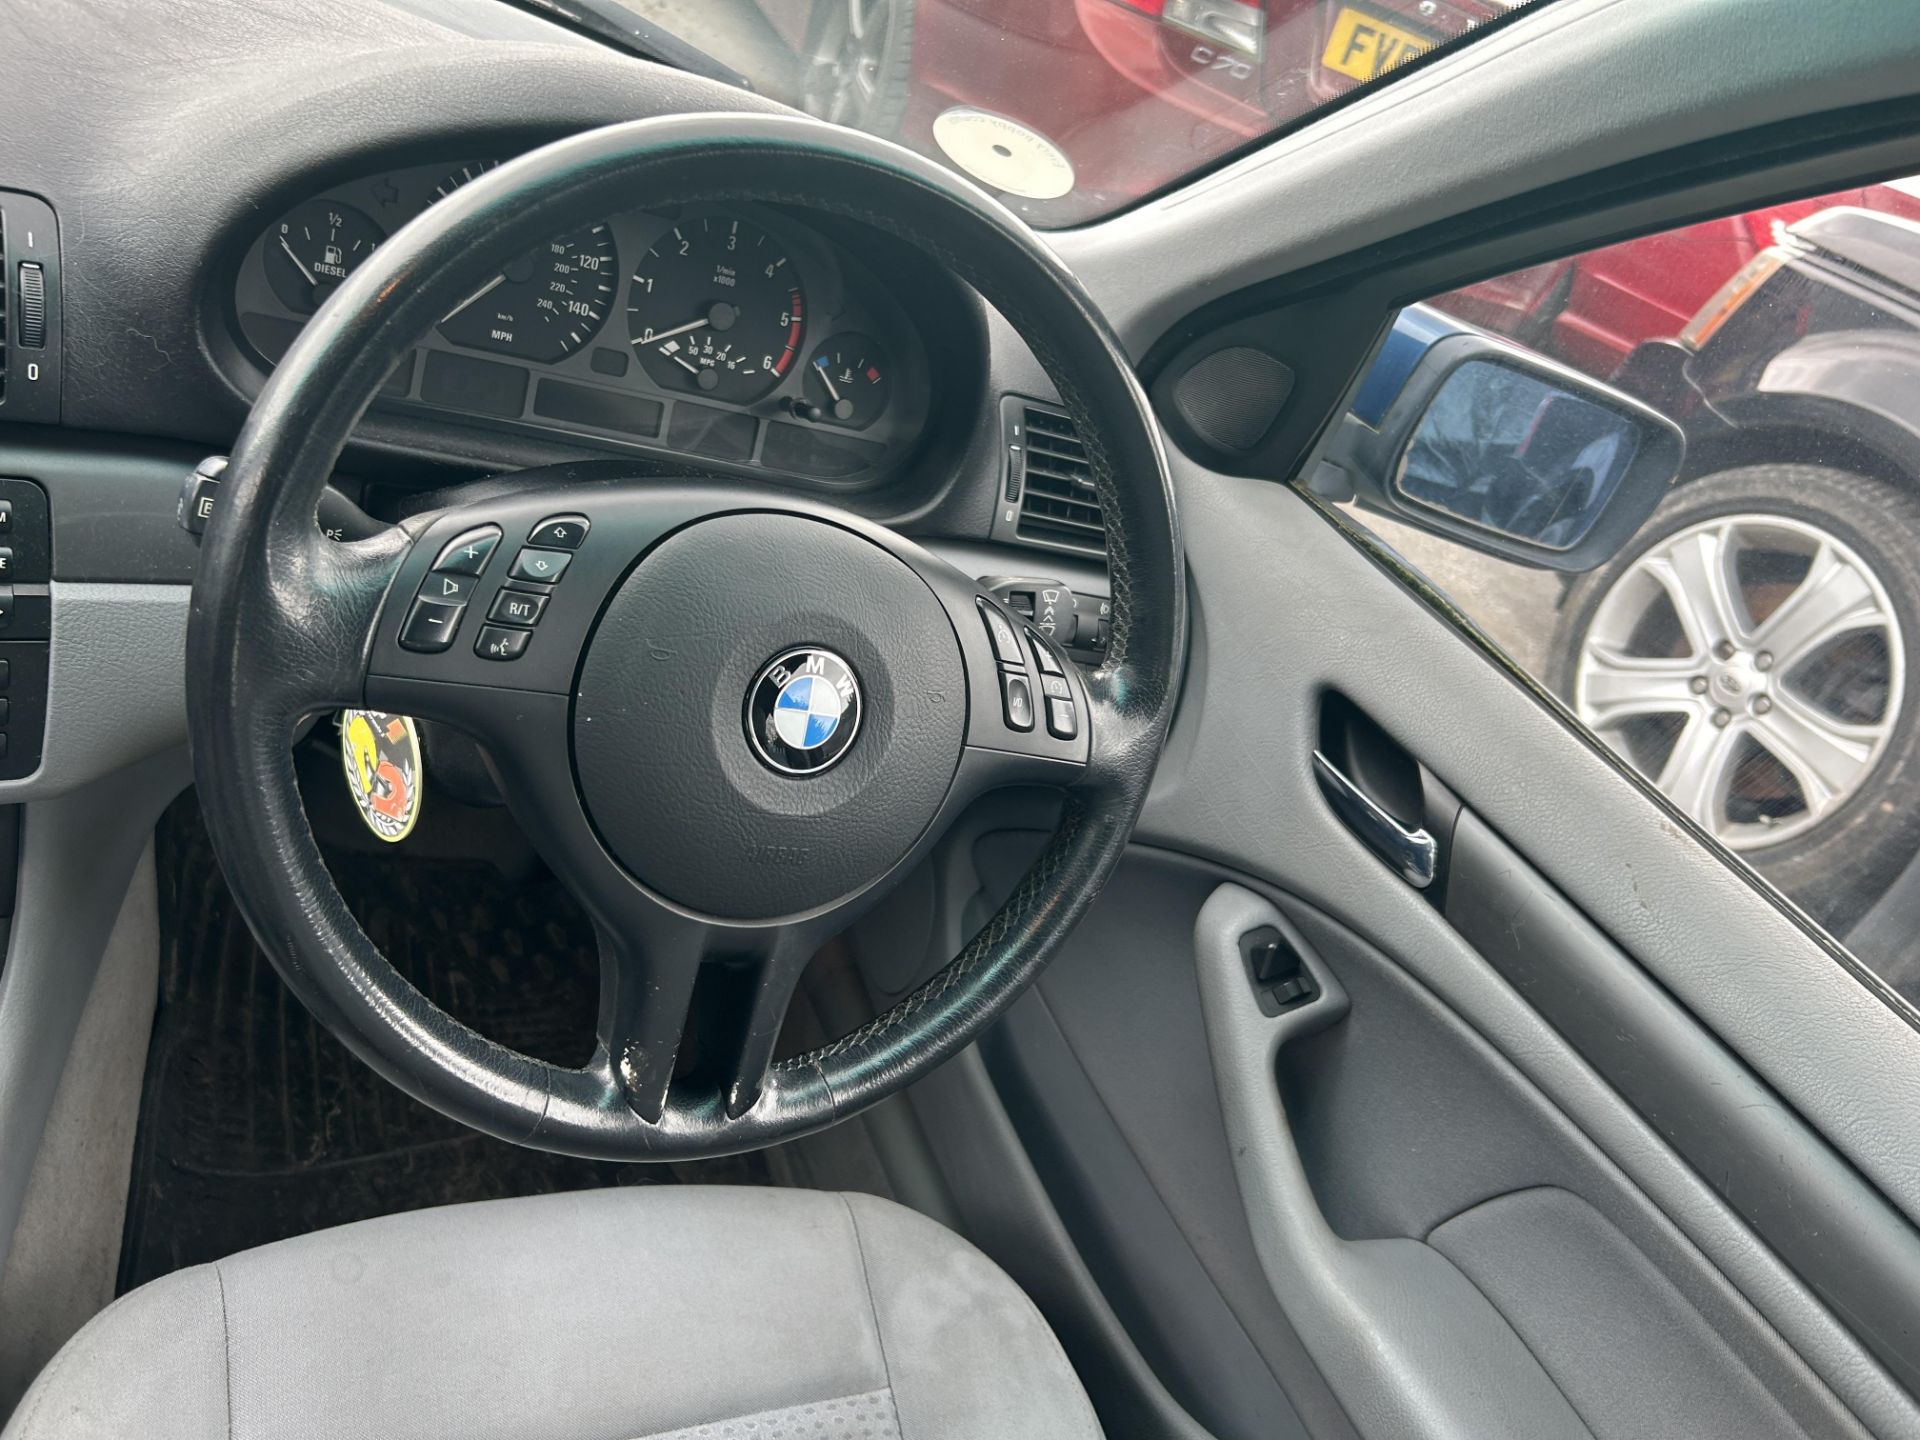 BMW 320D SE Diesel 4 Door Saloon | KL03 VLP | 177,570 Miles | RUNNER - Image 11 of 11